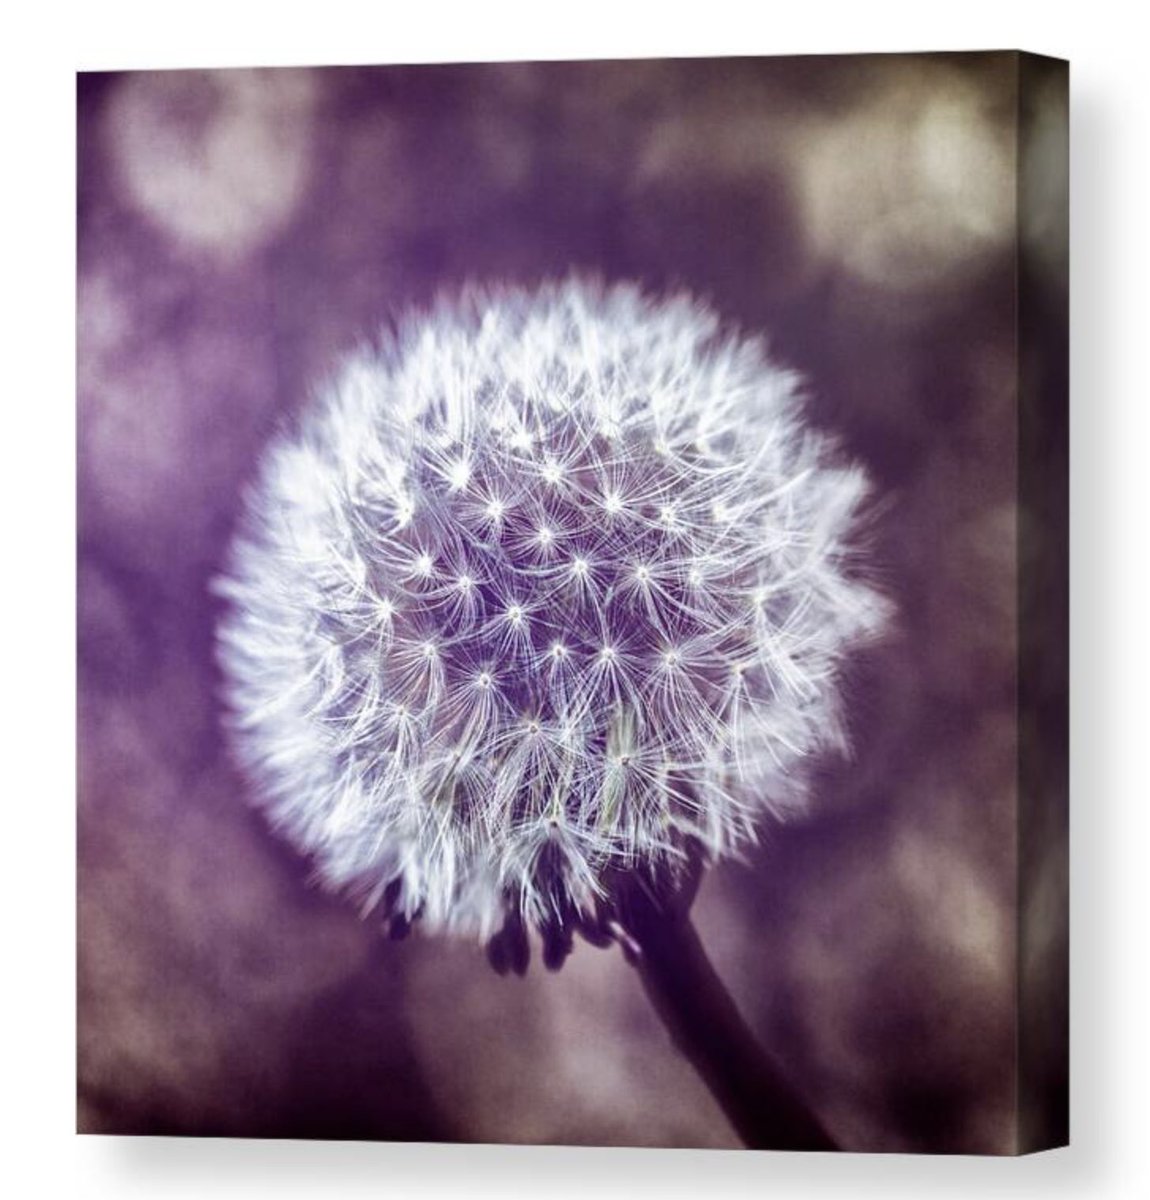 A Dandelion Seed Head 02 HERE: 5-tanya-smith.pixels.com/featured/a-dan… #WallArtDecor #wallart #prints #PhotographyIsArt #BuyIntoArt #FillThatEmptyWall #giftideas #gifts #homedecor #interiordecor #nature #botanical